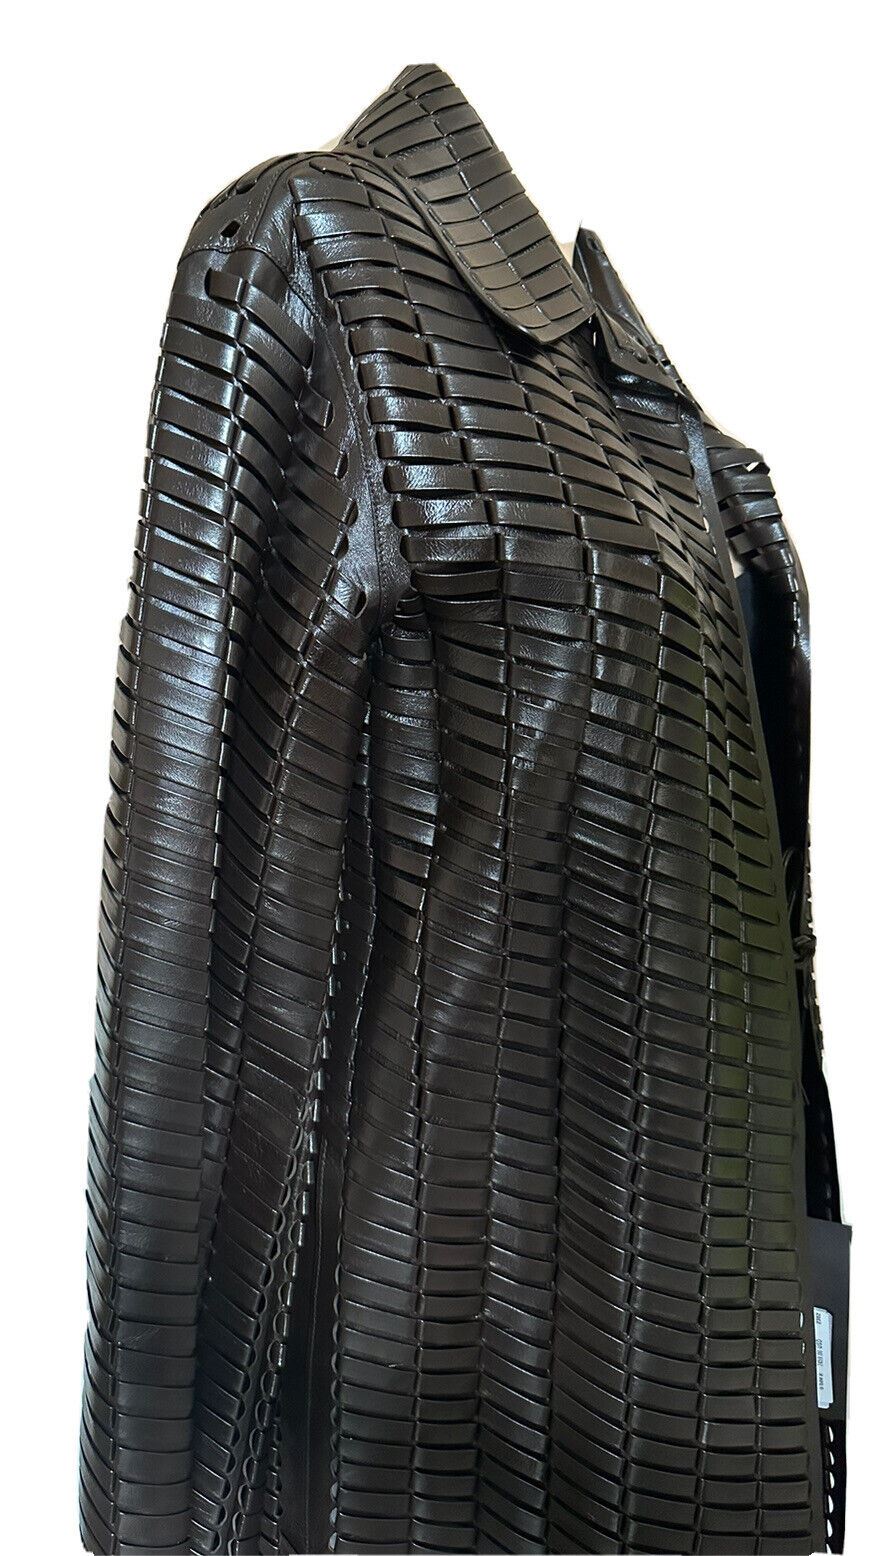 Neu mit Etikett: 14.900 $ Bottega Veneta Damen-Mantel aus gewebtem glänzendem Leder Schokolade 36R 618482 